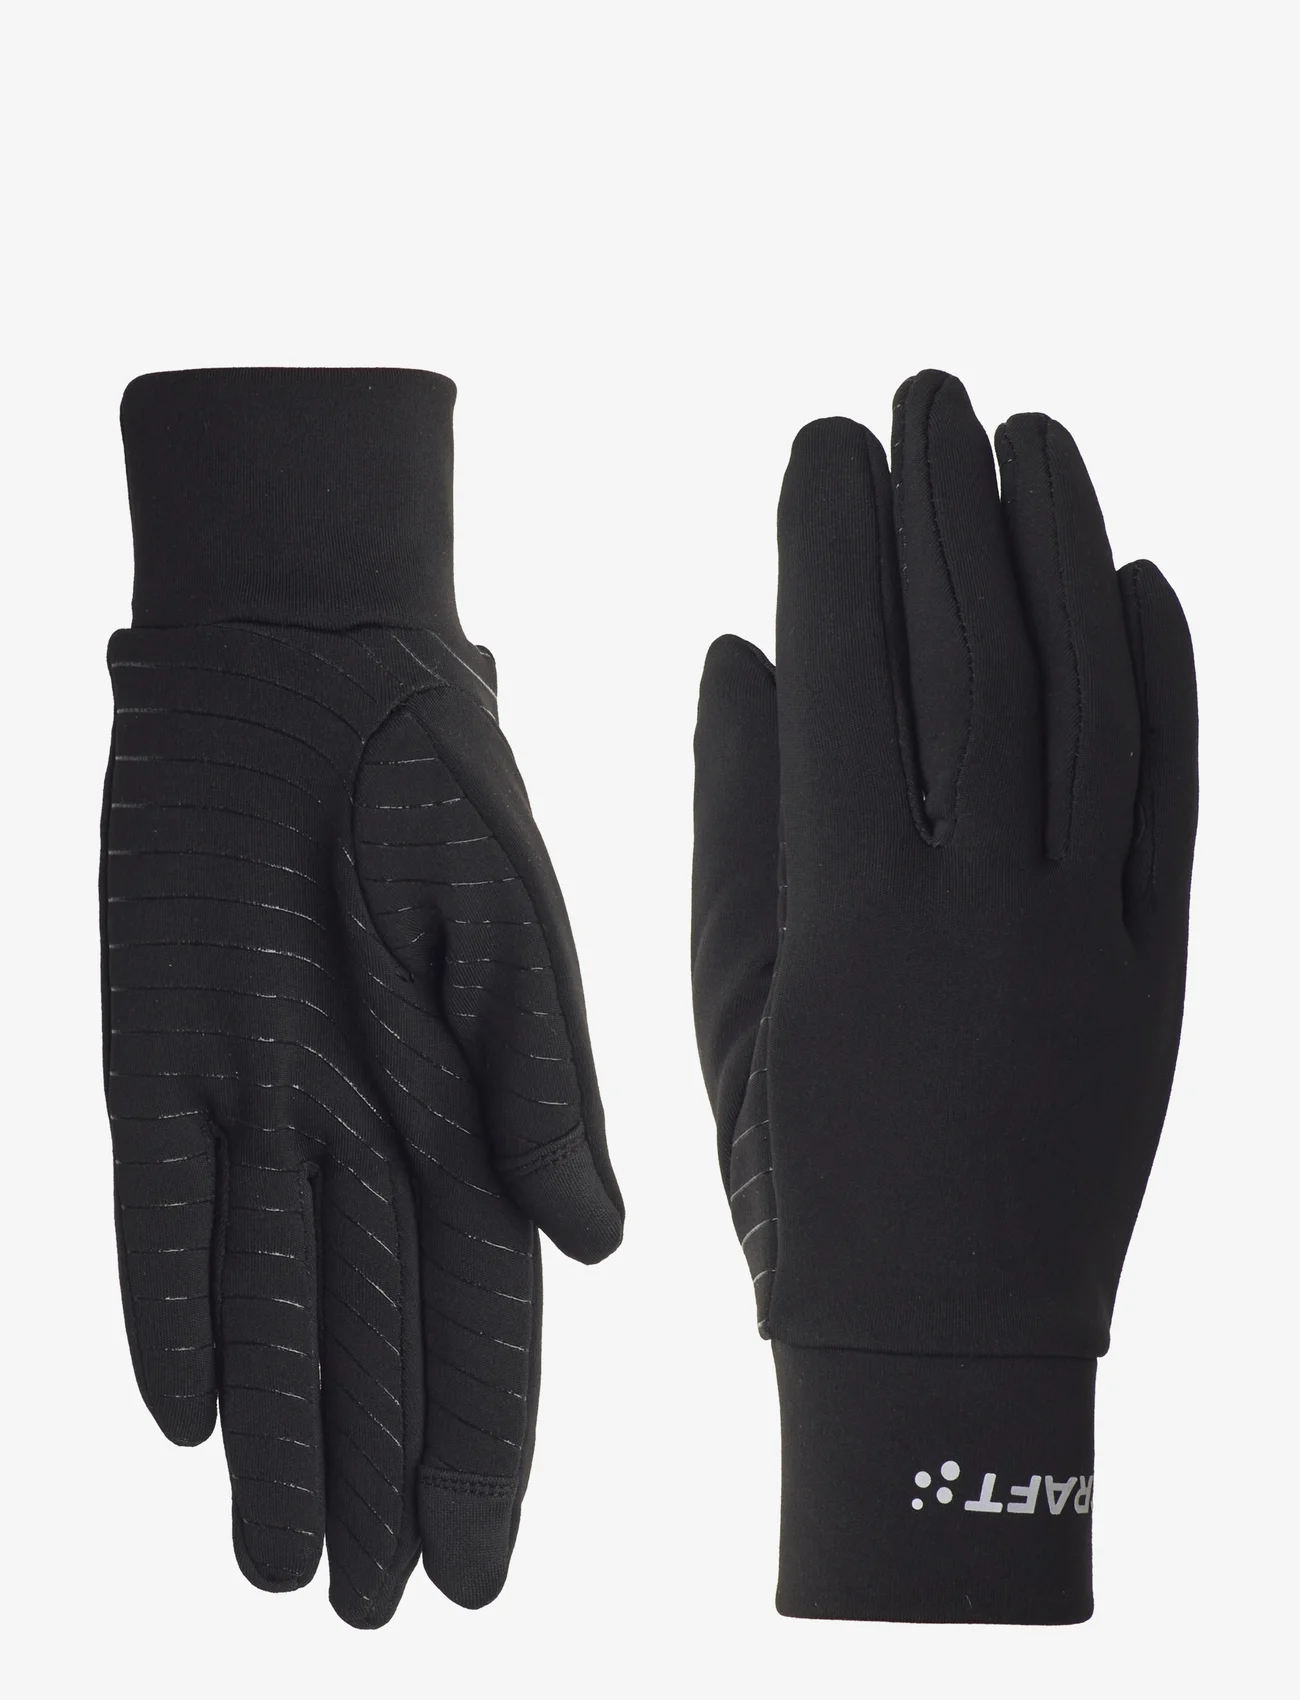 Craft - Core Essence Thermal Multi Grip Glove 2 - men - black - 0